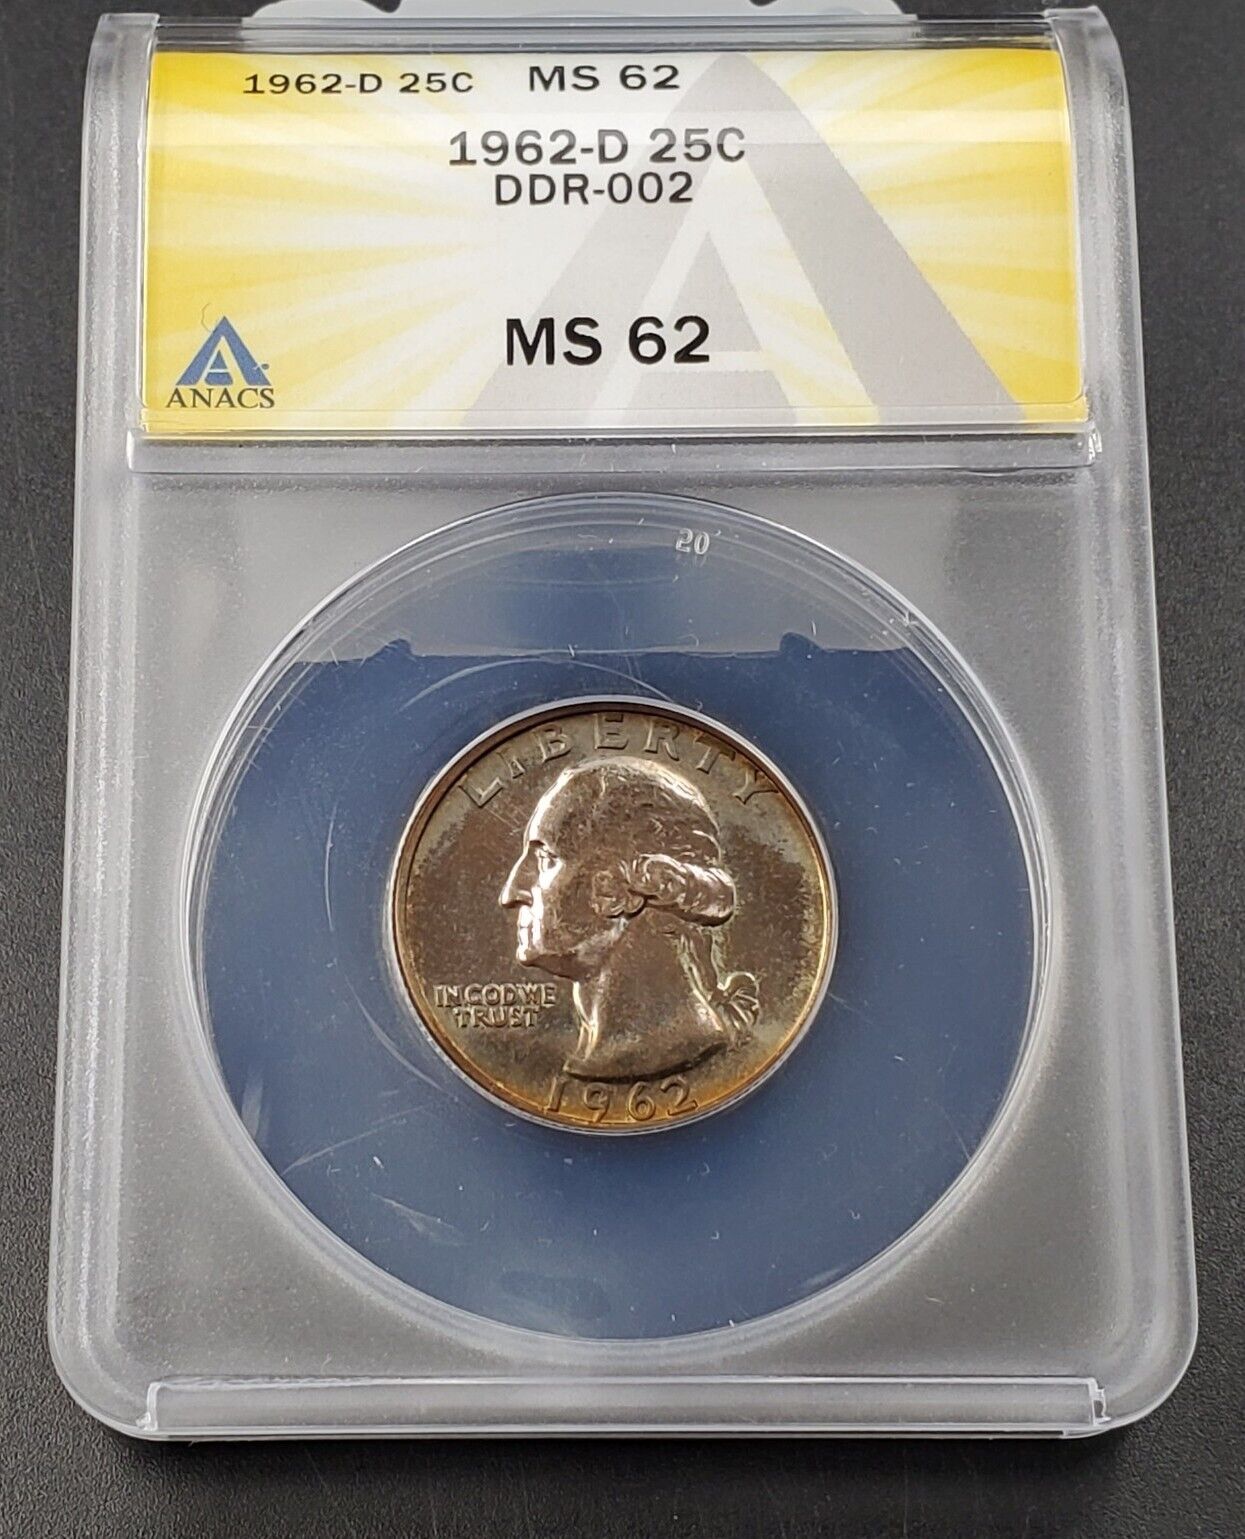 1962 D Washington Quarter 25c ANACS MS62 Double Die REV DDR 002 Variety Coin